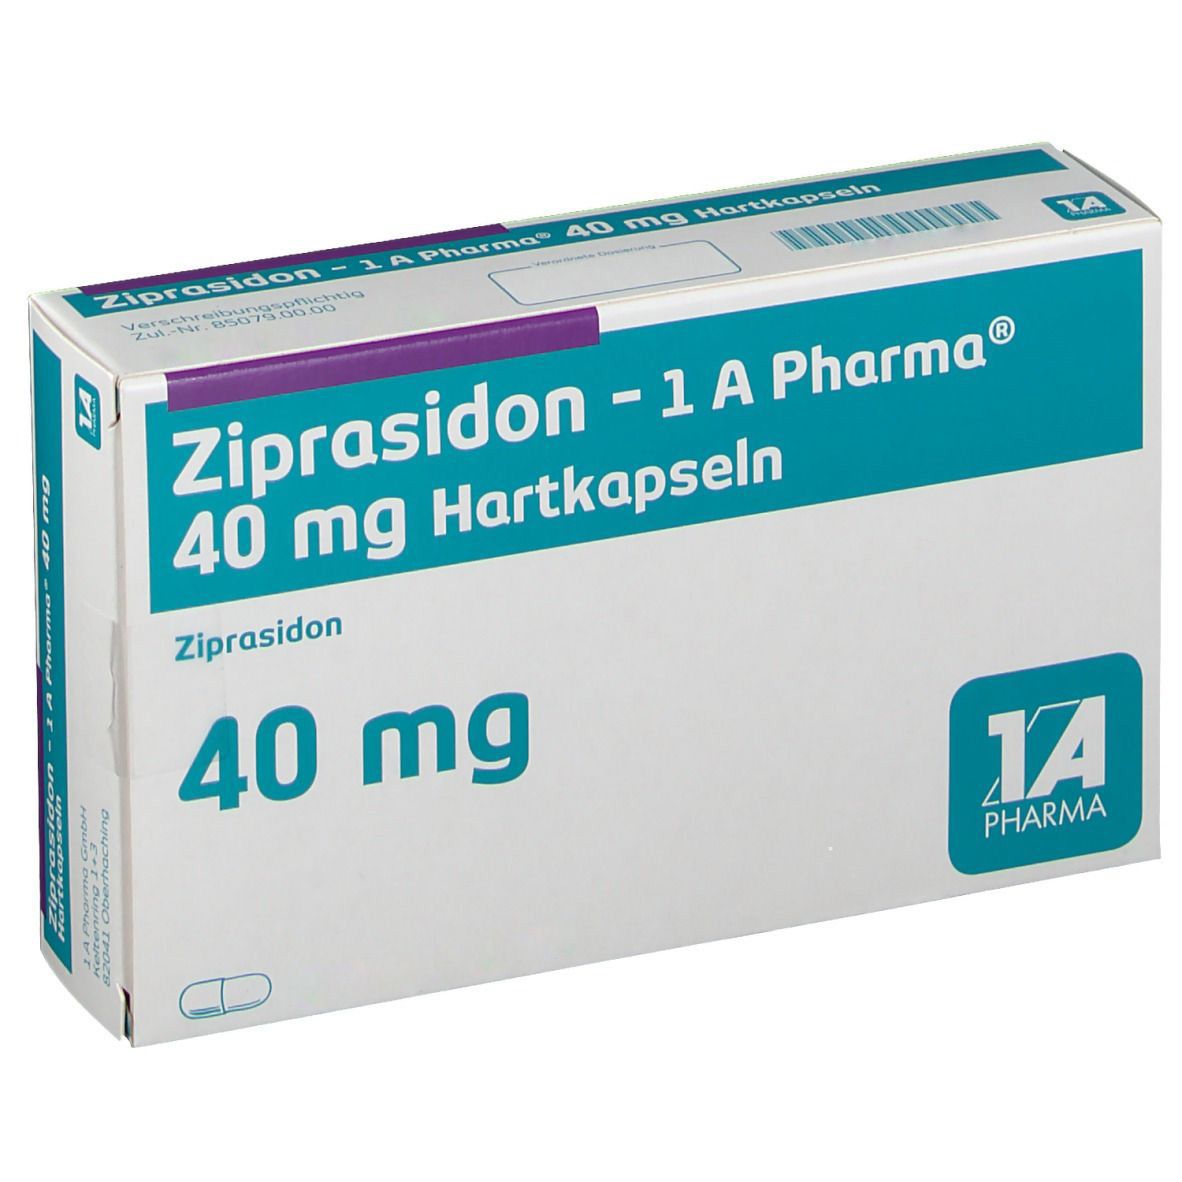 Ziprasidon - 1 A Pharma® 40 mg